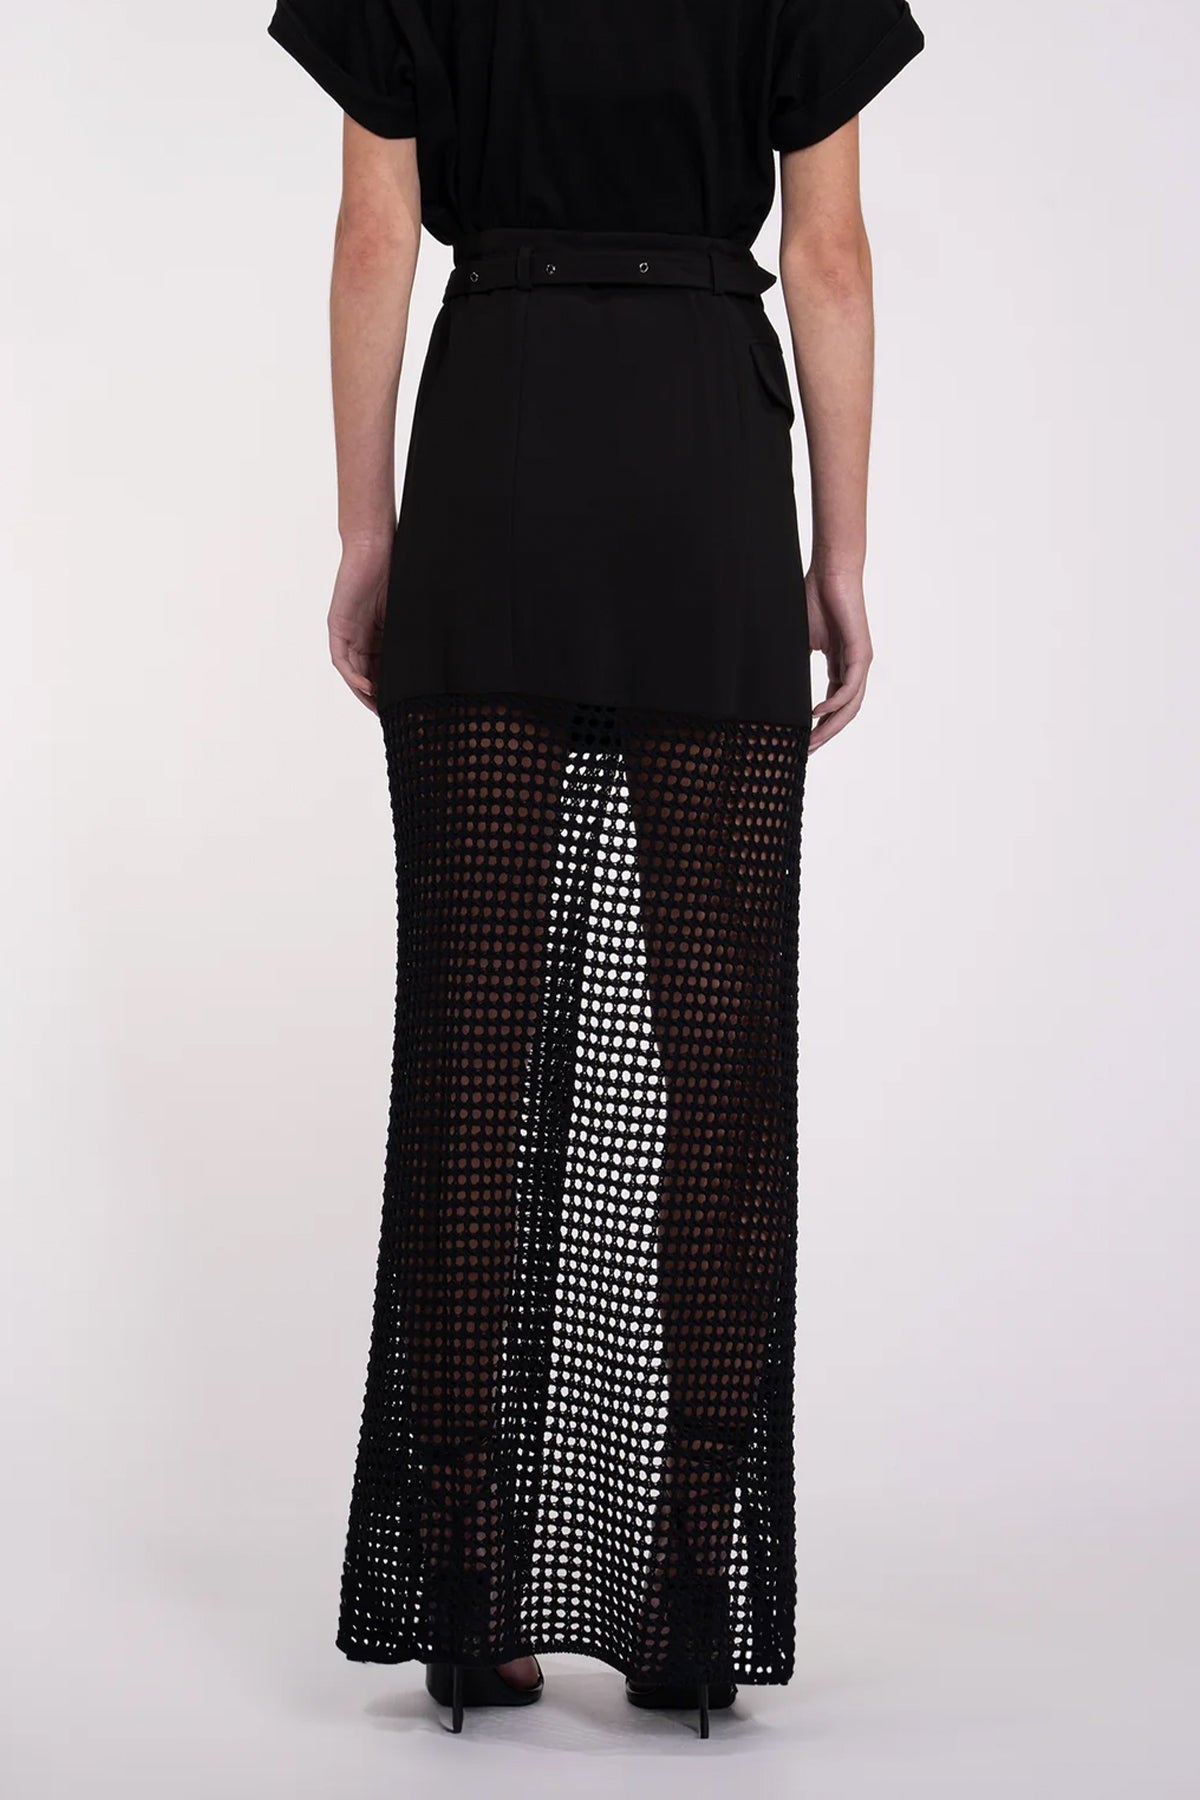 Tyra Maxi Skirt in Black - shop-olivia.com